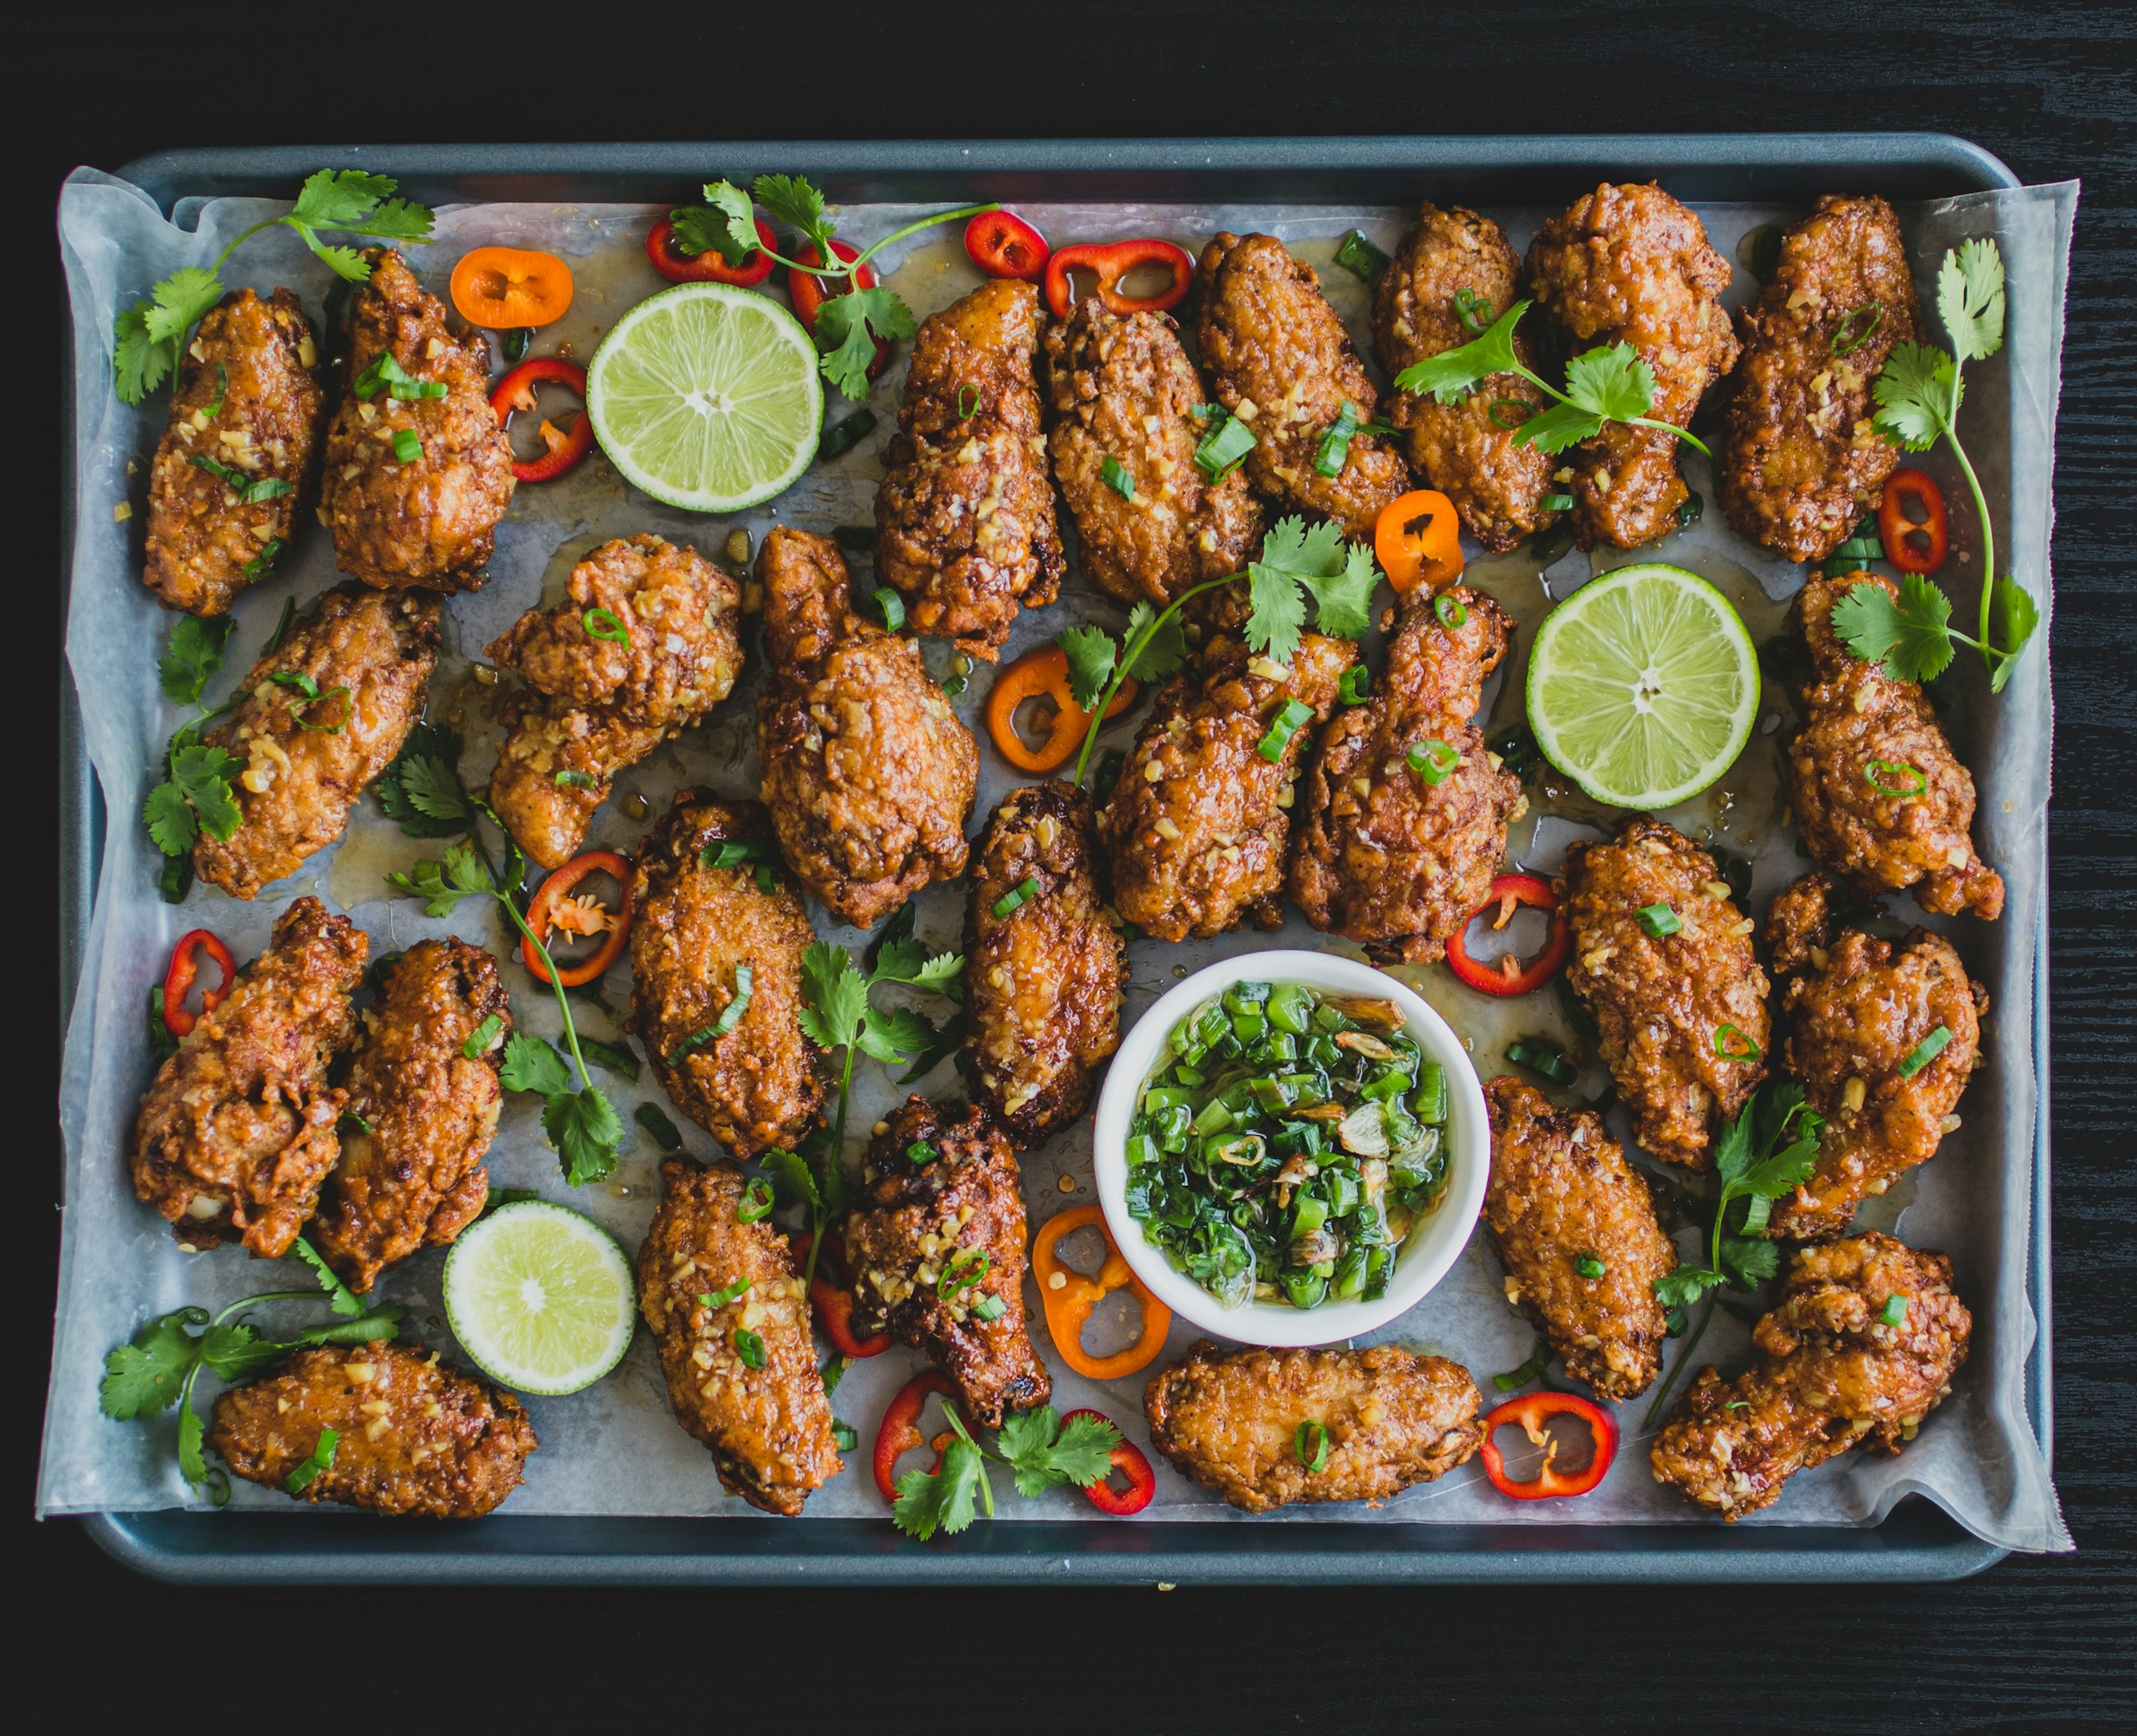 Fried chicken on a tray | Source: Unsplash